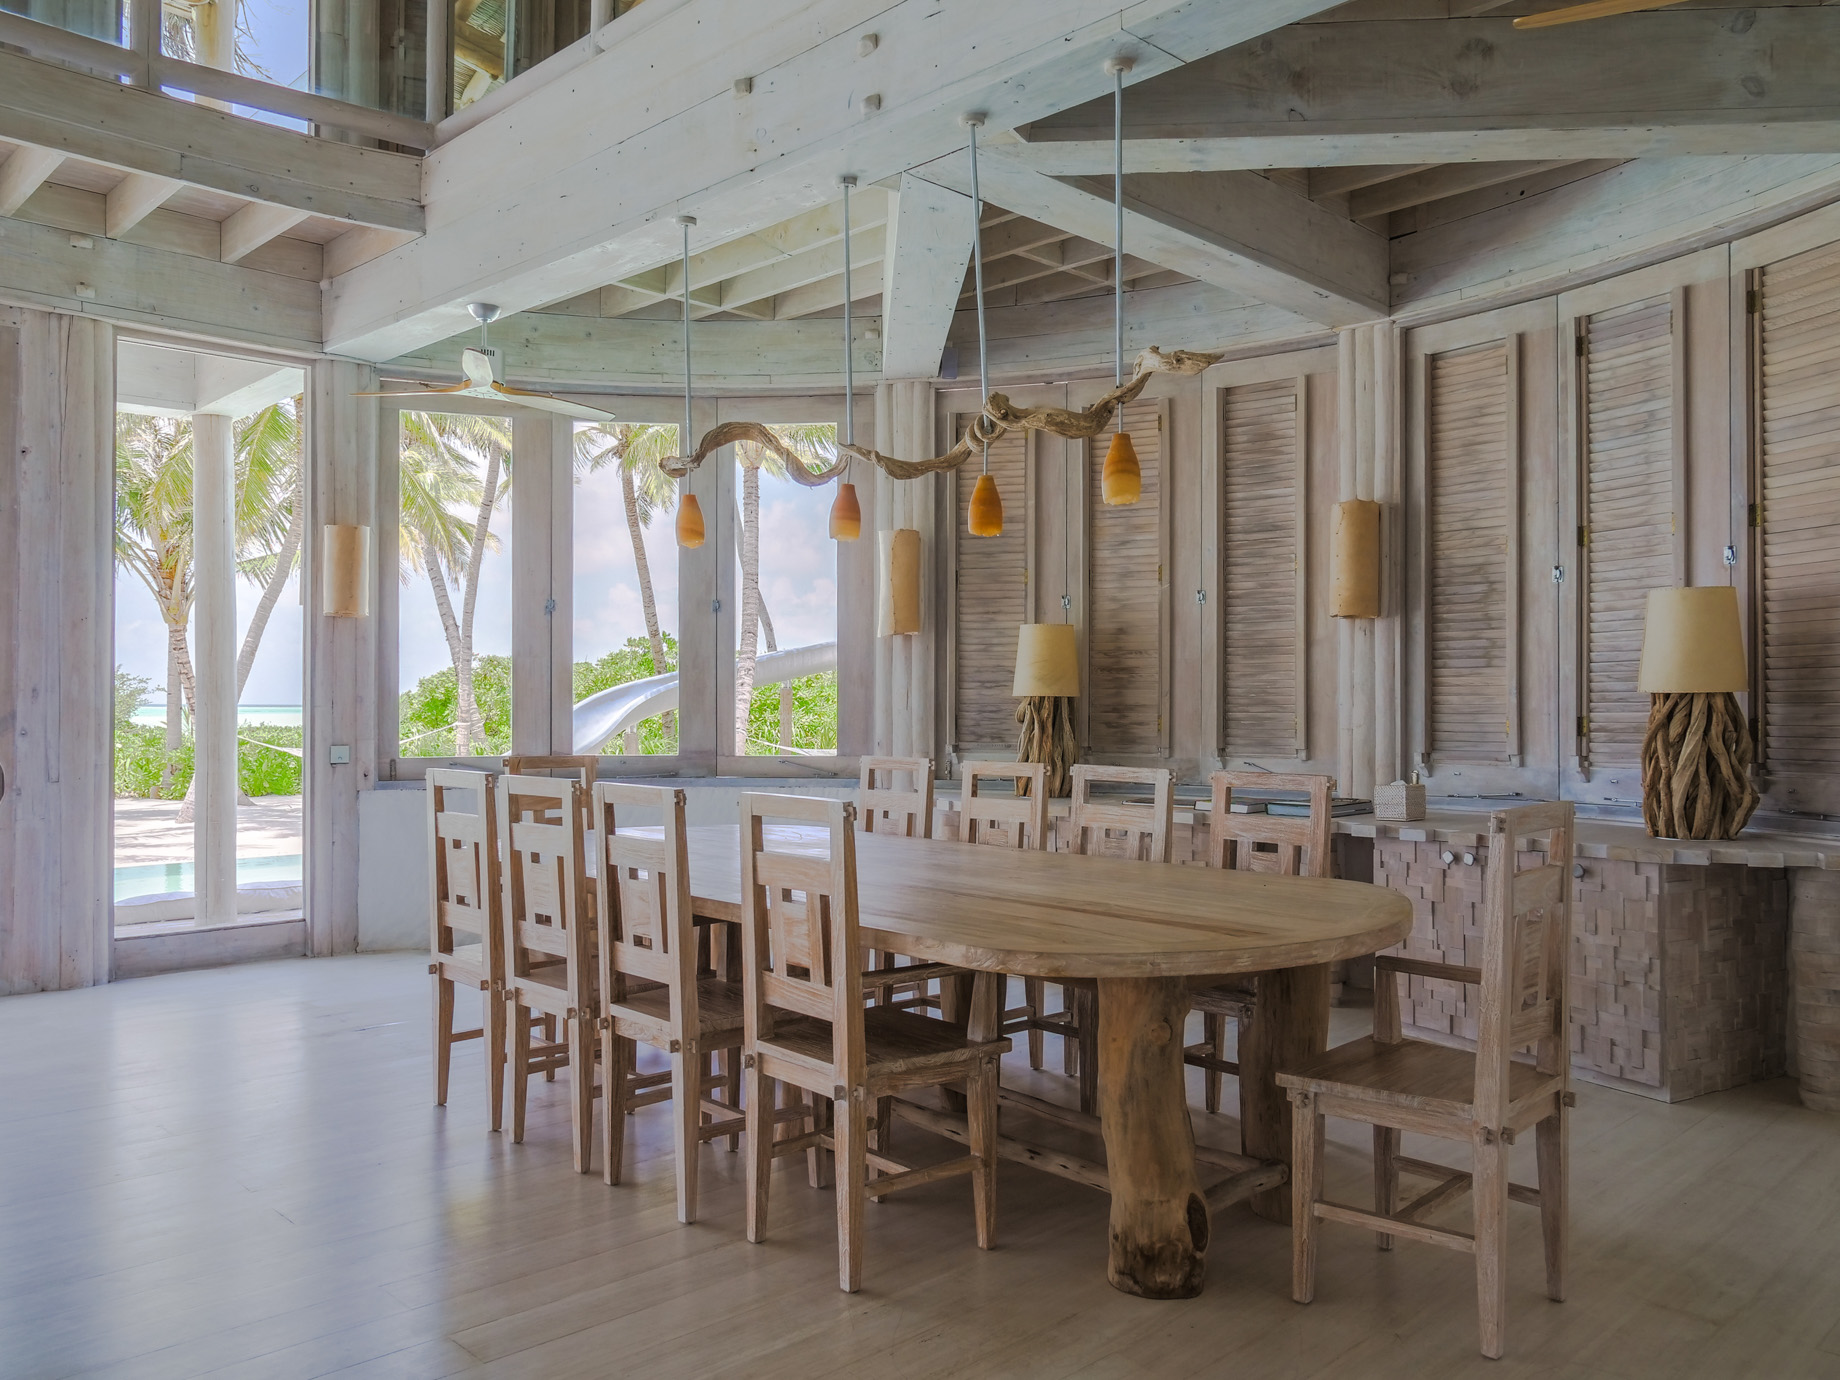 Soneva Jani Resort – Noonu Atoll, Medhufaru, Maldives – 4 Bedroom Island Reserve Villa Dining Table